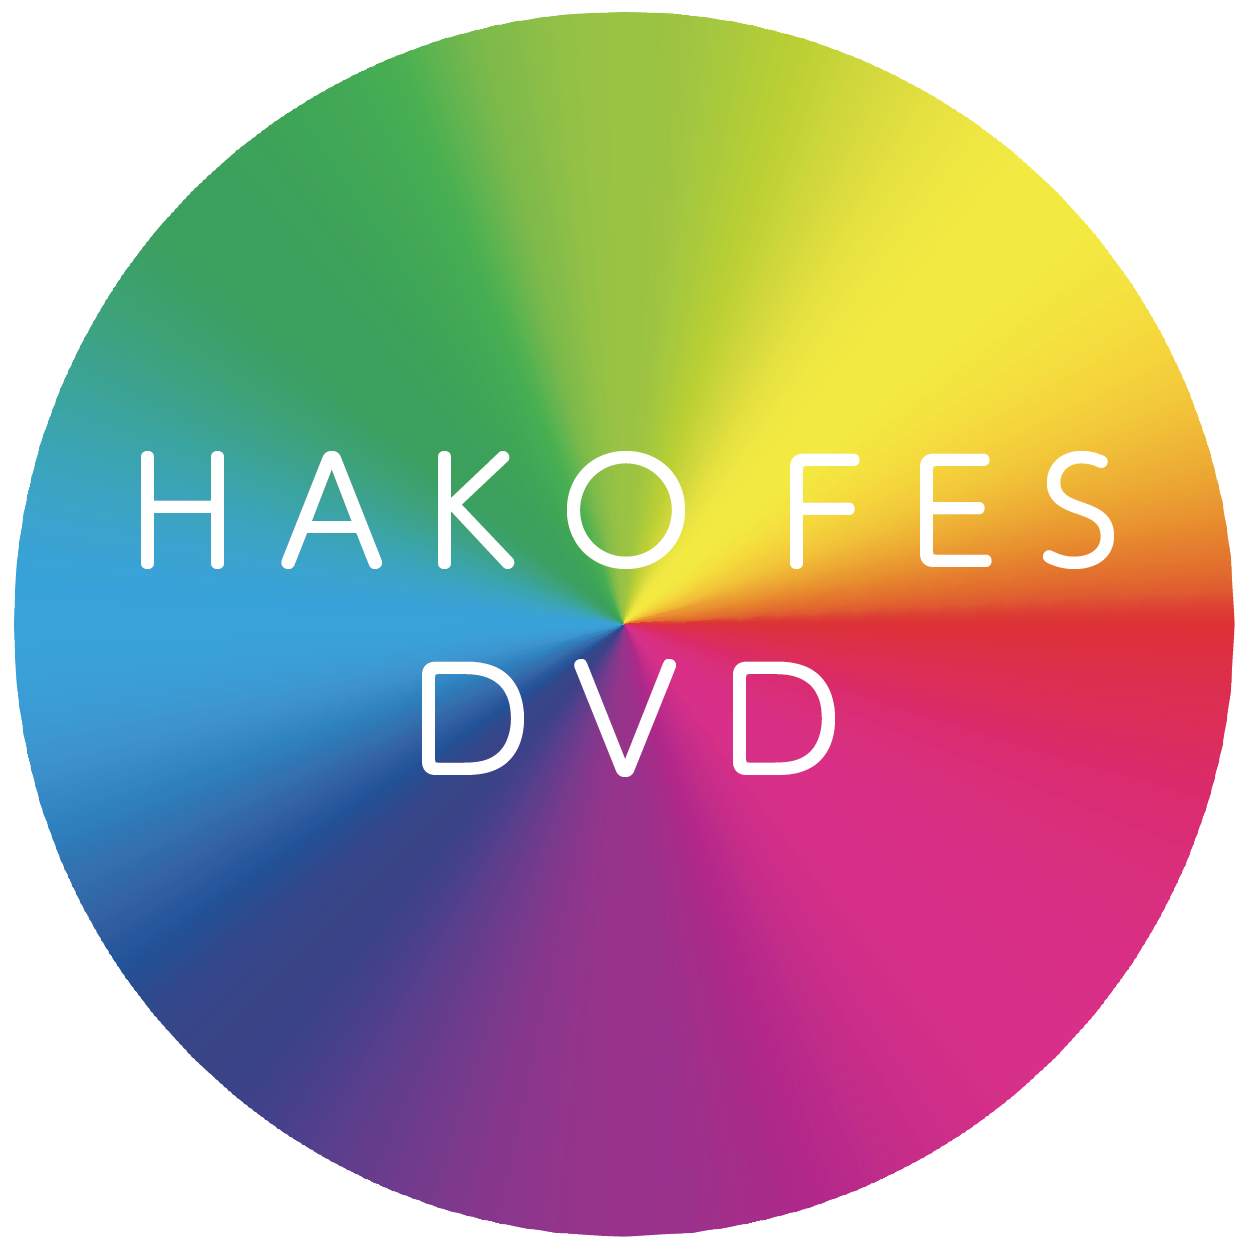 HAKO FES DVD